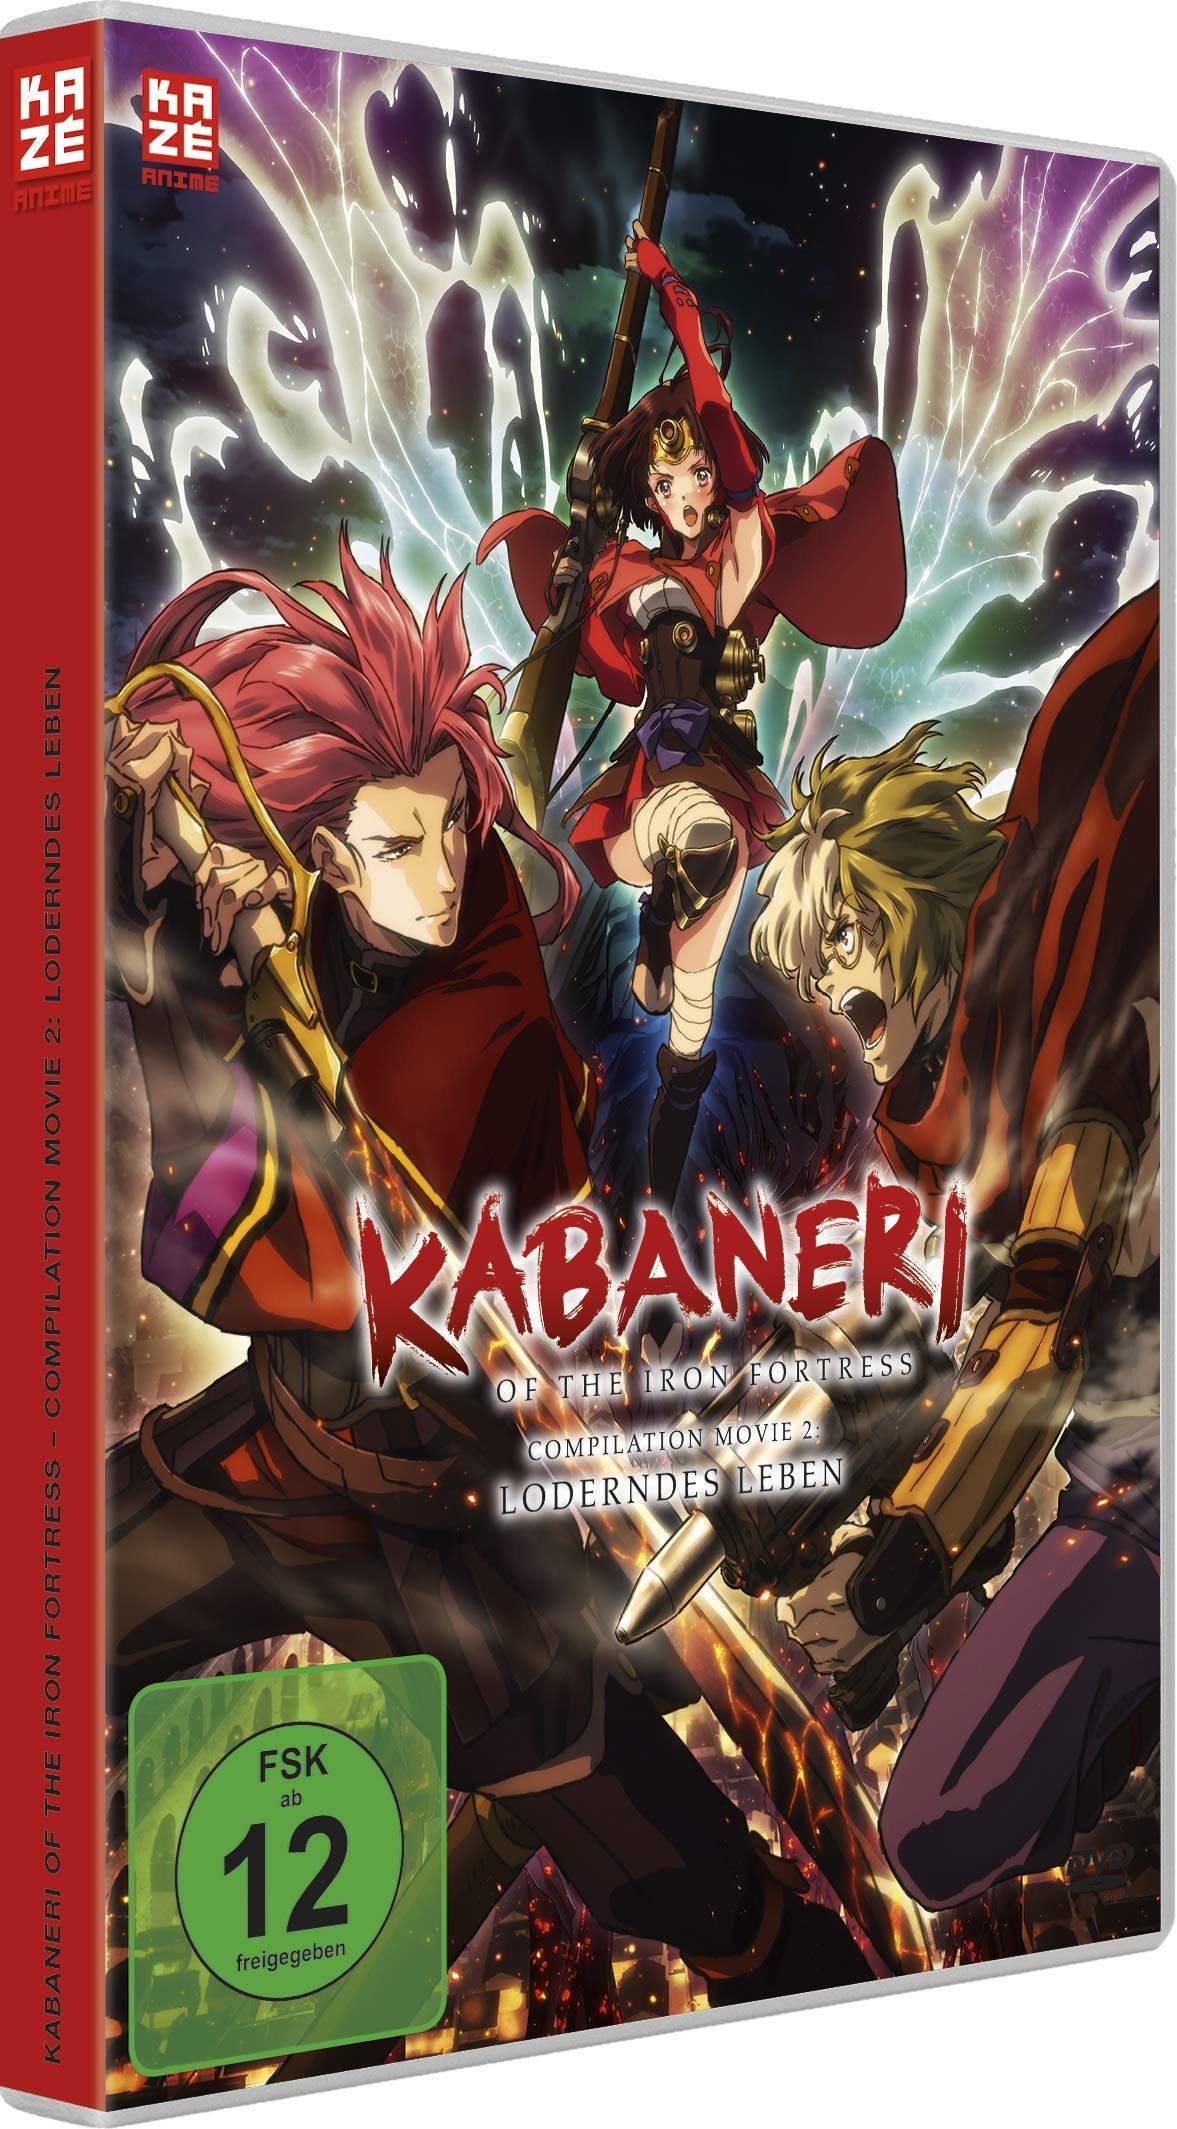 Kabaneri of the Iron Fortress: Loderndes Leben - Movie 2 - [DVD]